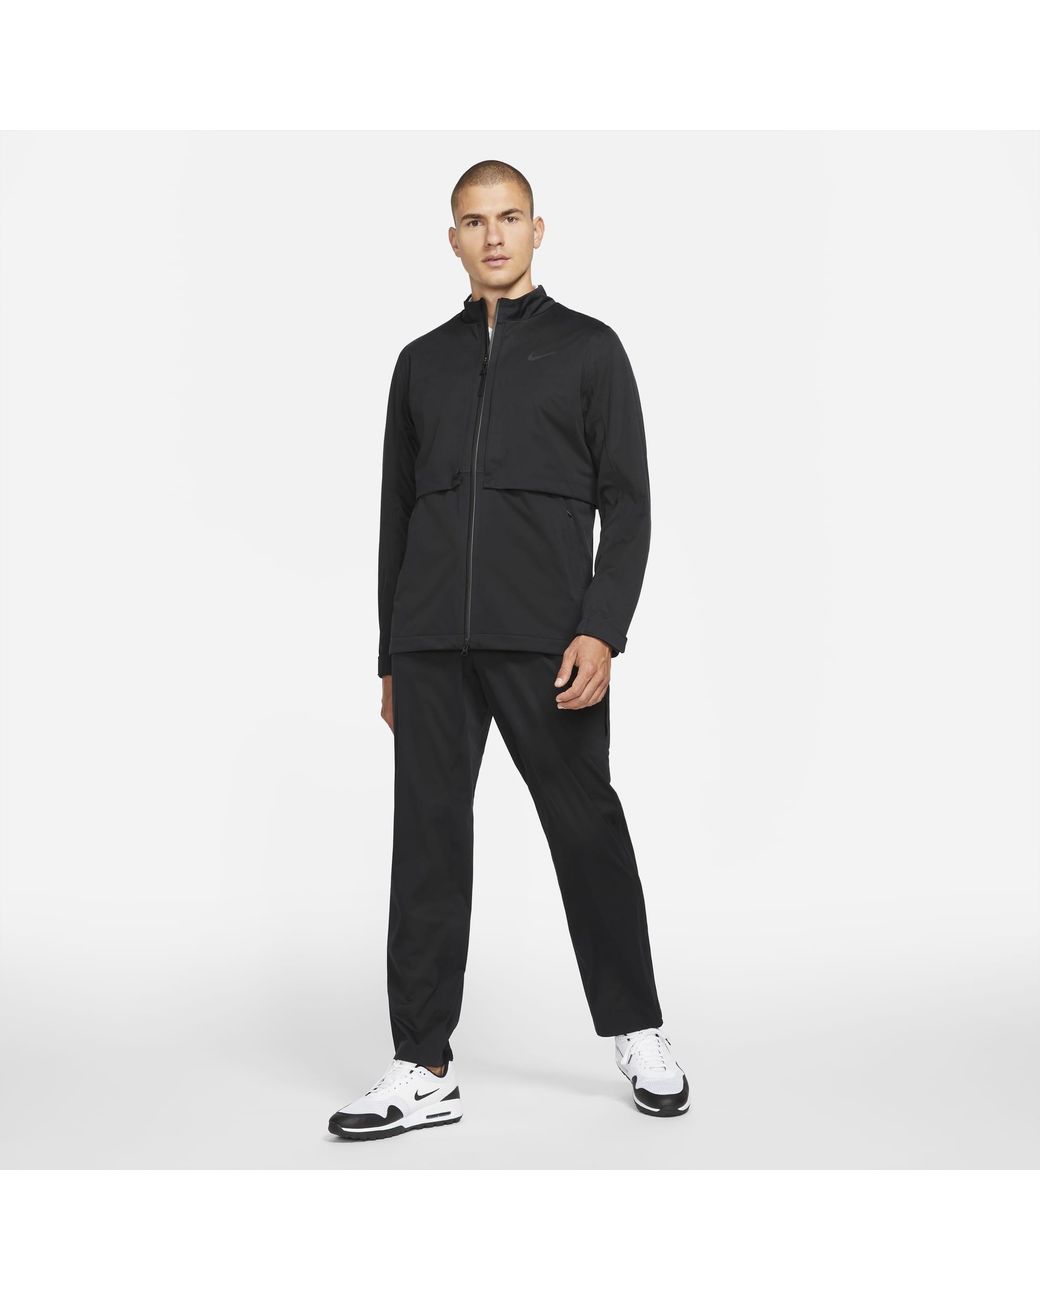 Nike Synthetic Storm-fit Adv Rapid Adapt Golf Jacket in Black,Black (Black)  for Men | Lyst